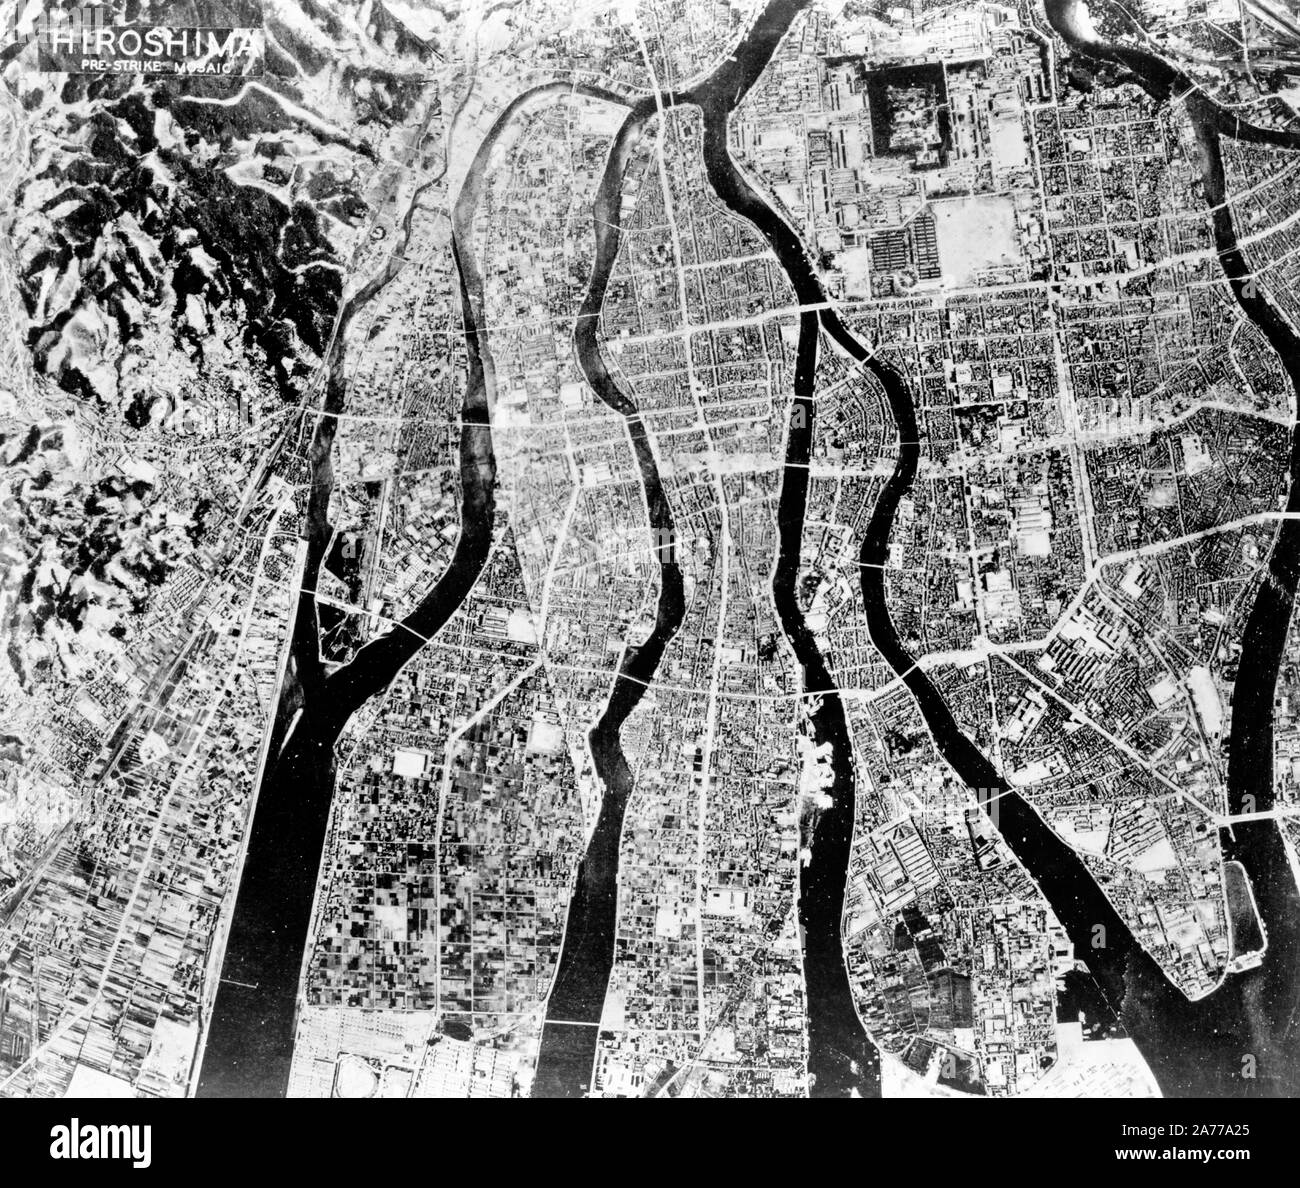 Pre-strike aerial view of Hiroshima, Japan 1945 Stock Photo